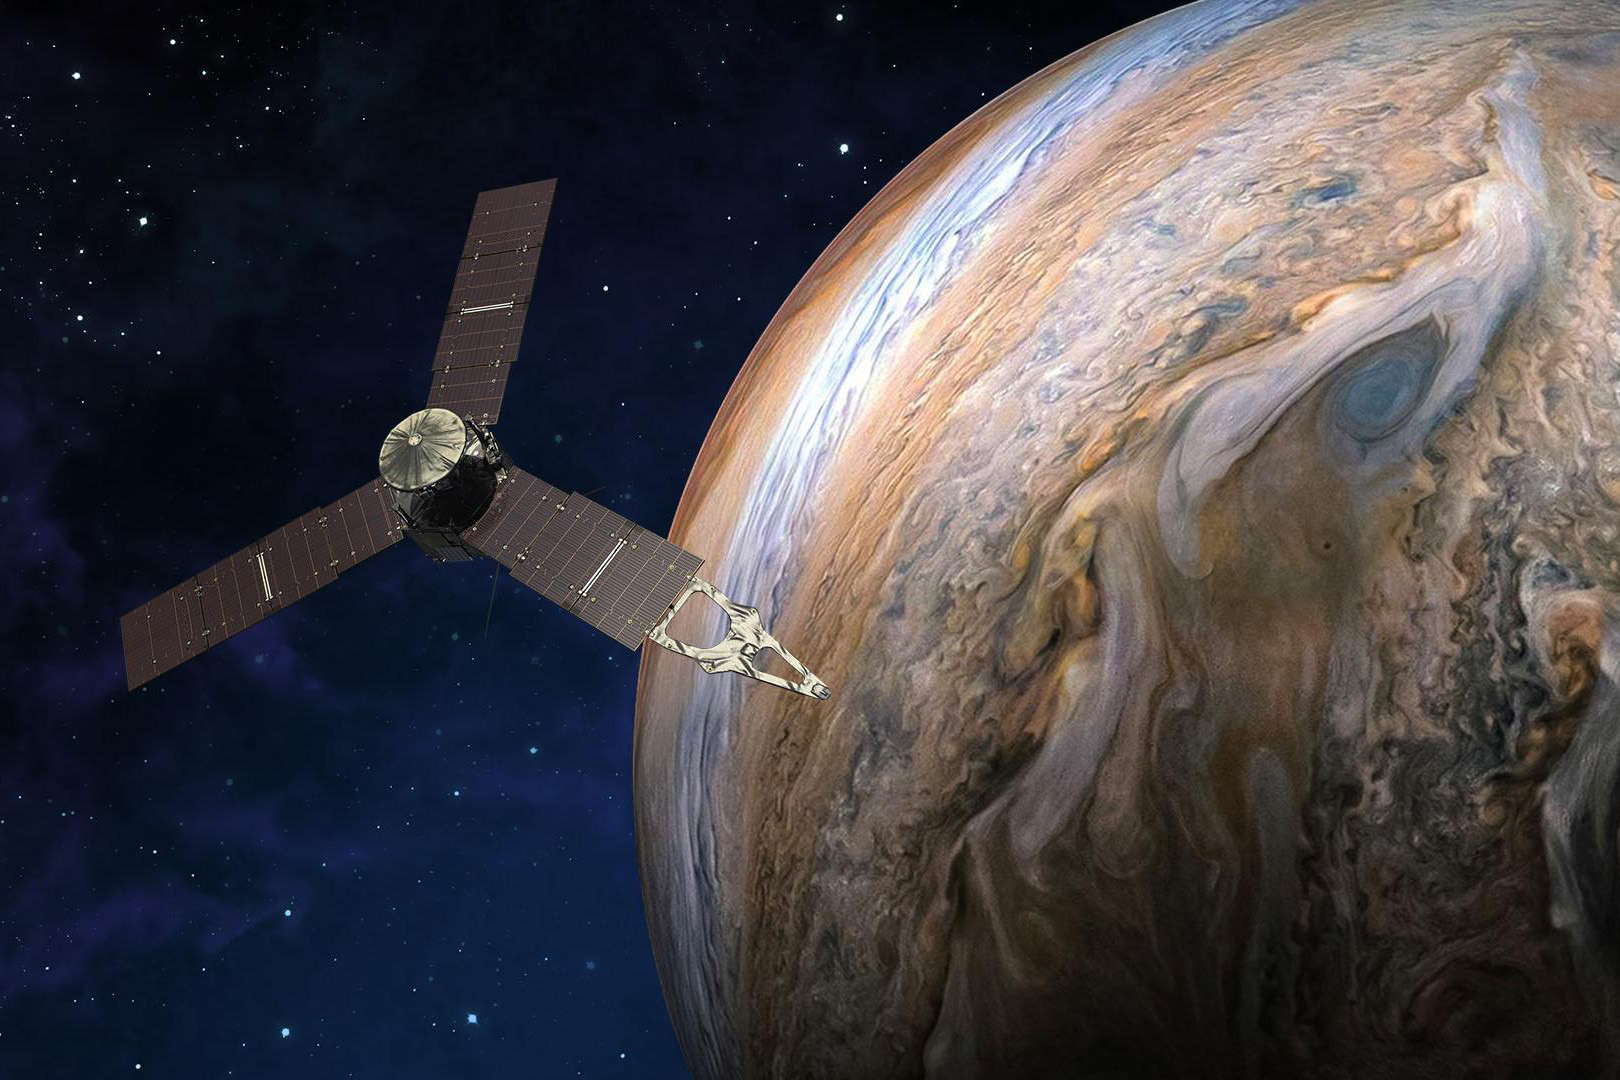 Jupiter Energetic Particle Detector Instrument